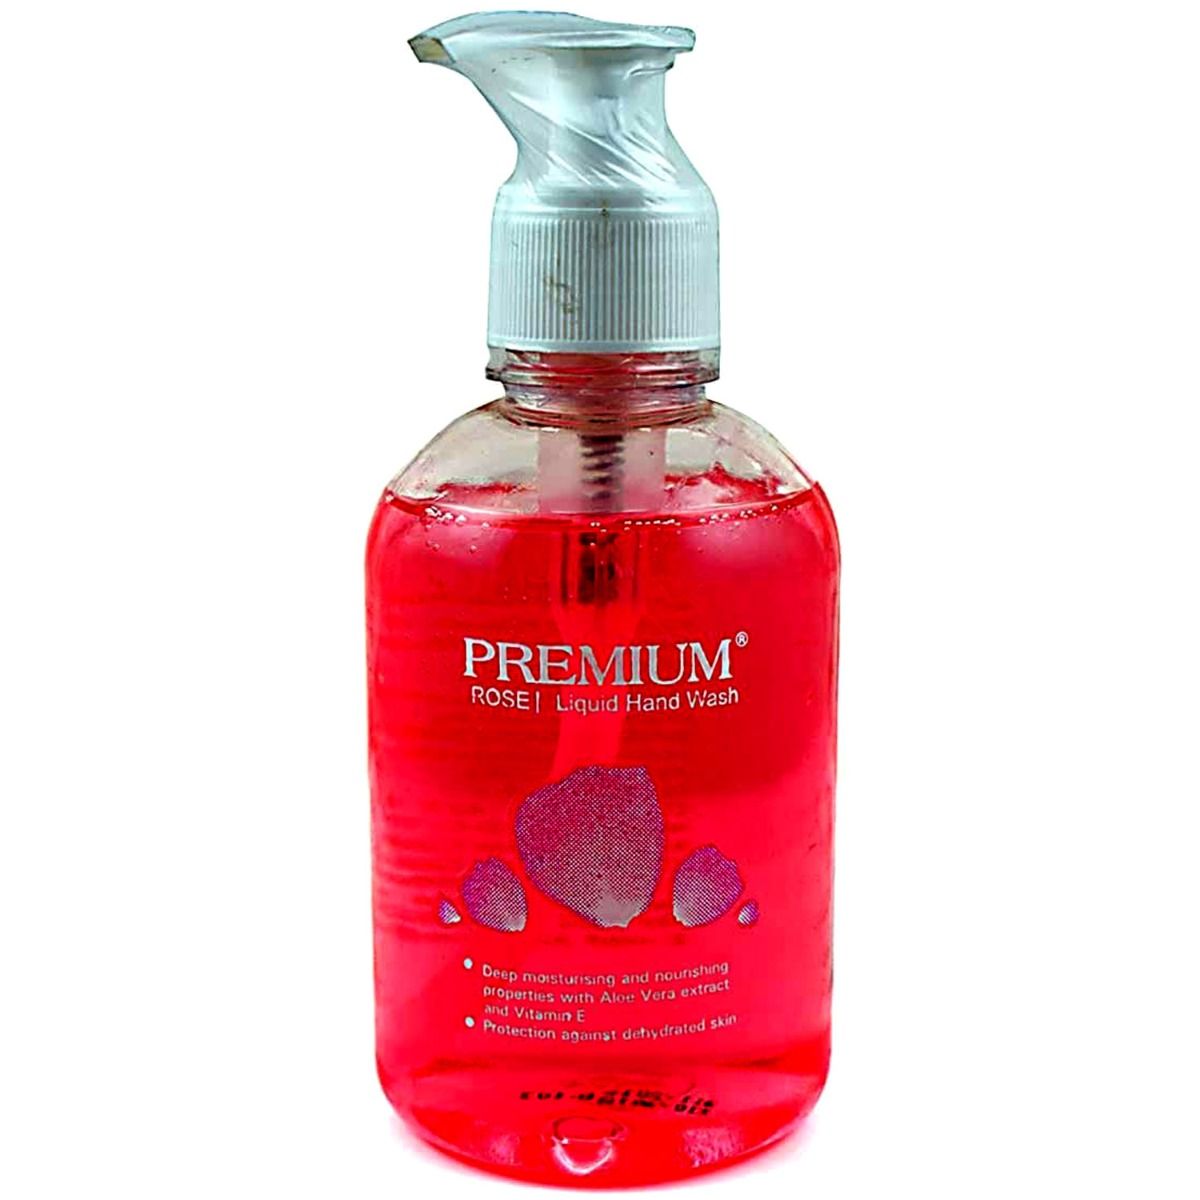 Buy Premium Rose Liquid Handwash, 250 ml Pump Bottle Online